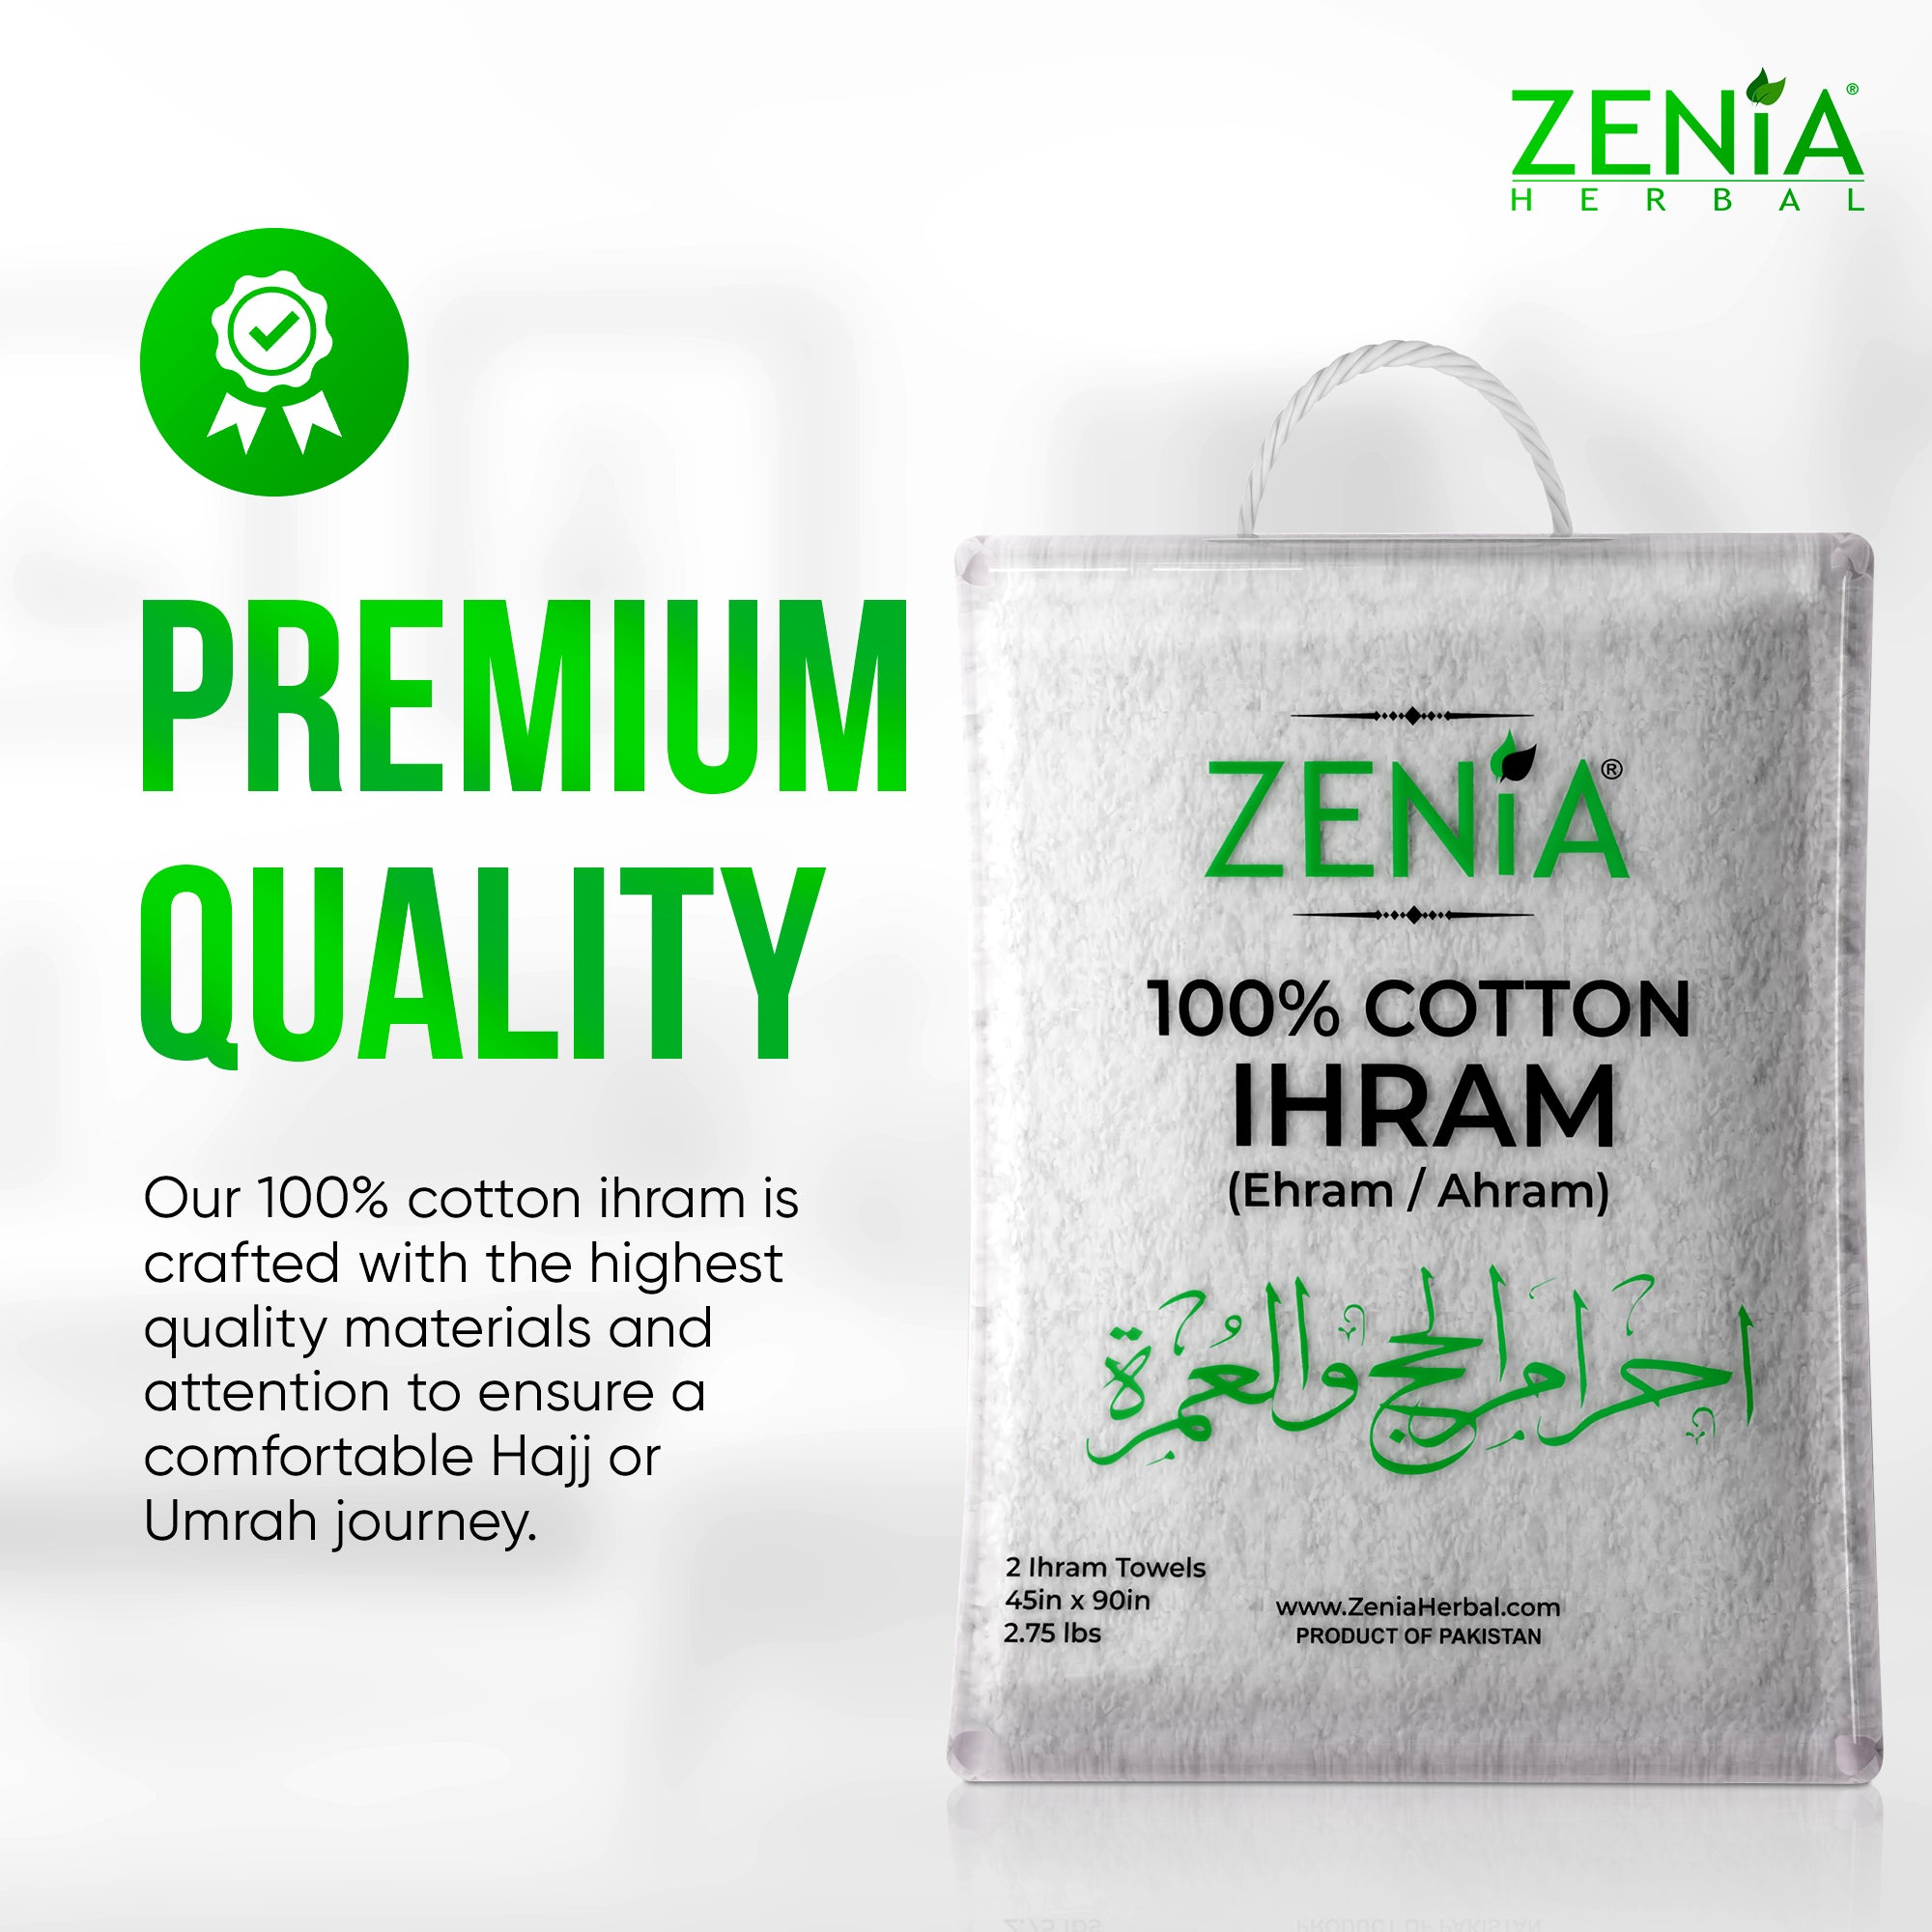 Zenia 100% Cotton Ihram (Ahram/Ehram) Towel for Hajj and Umrah